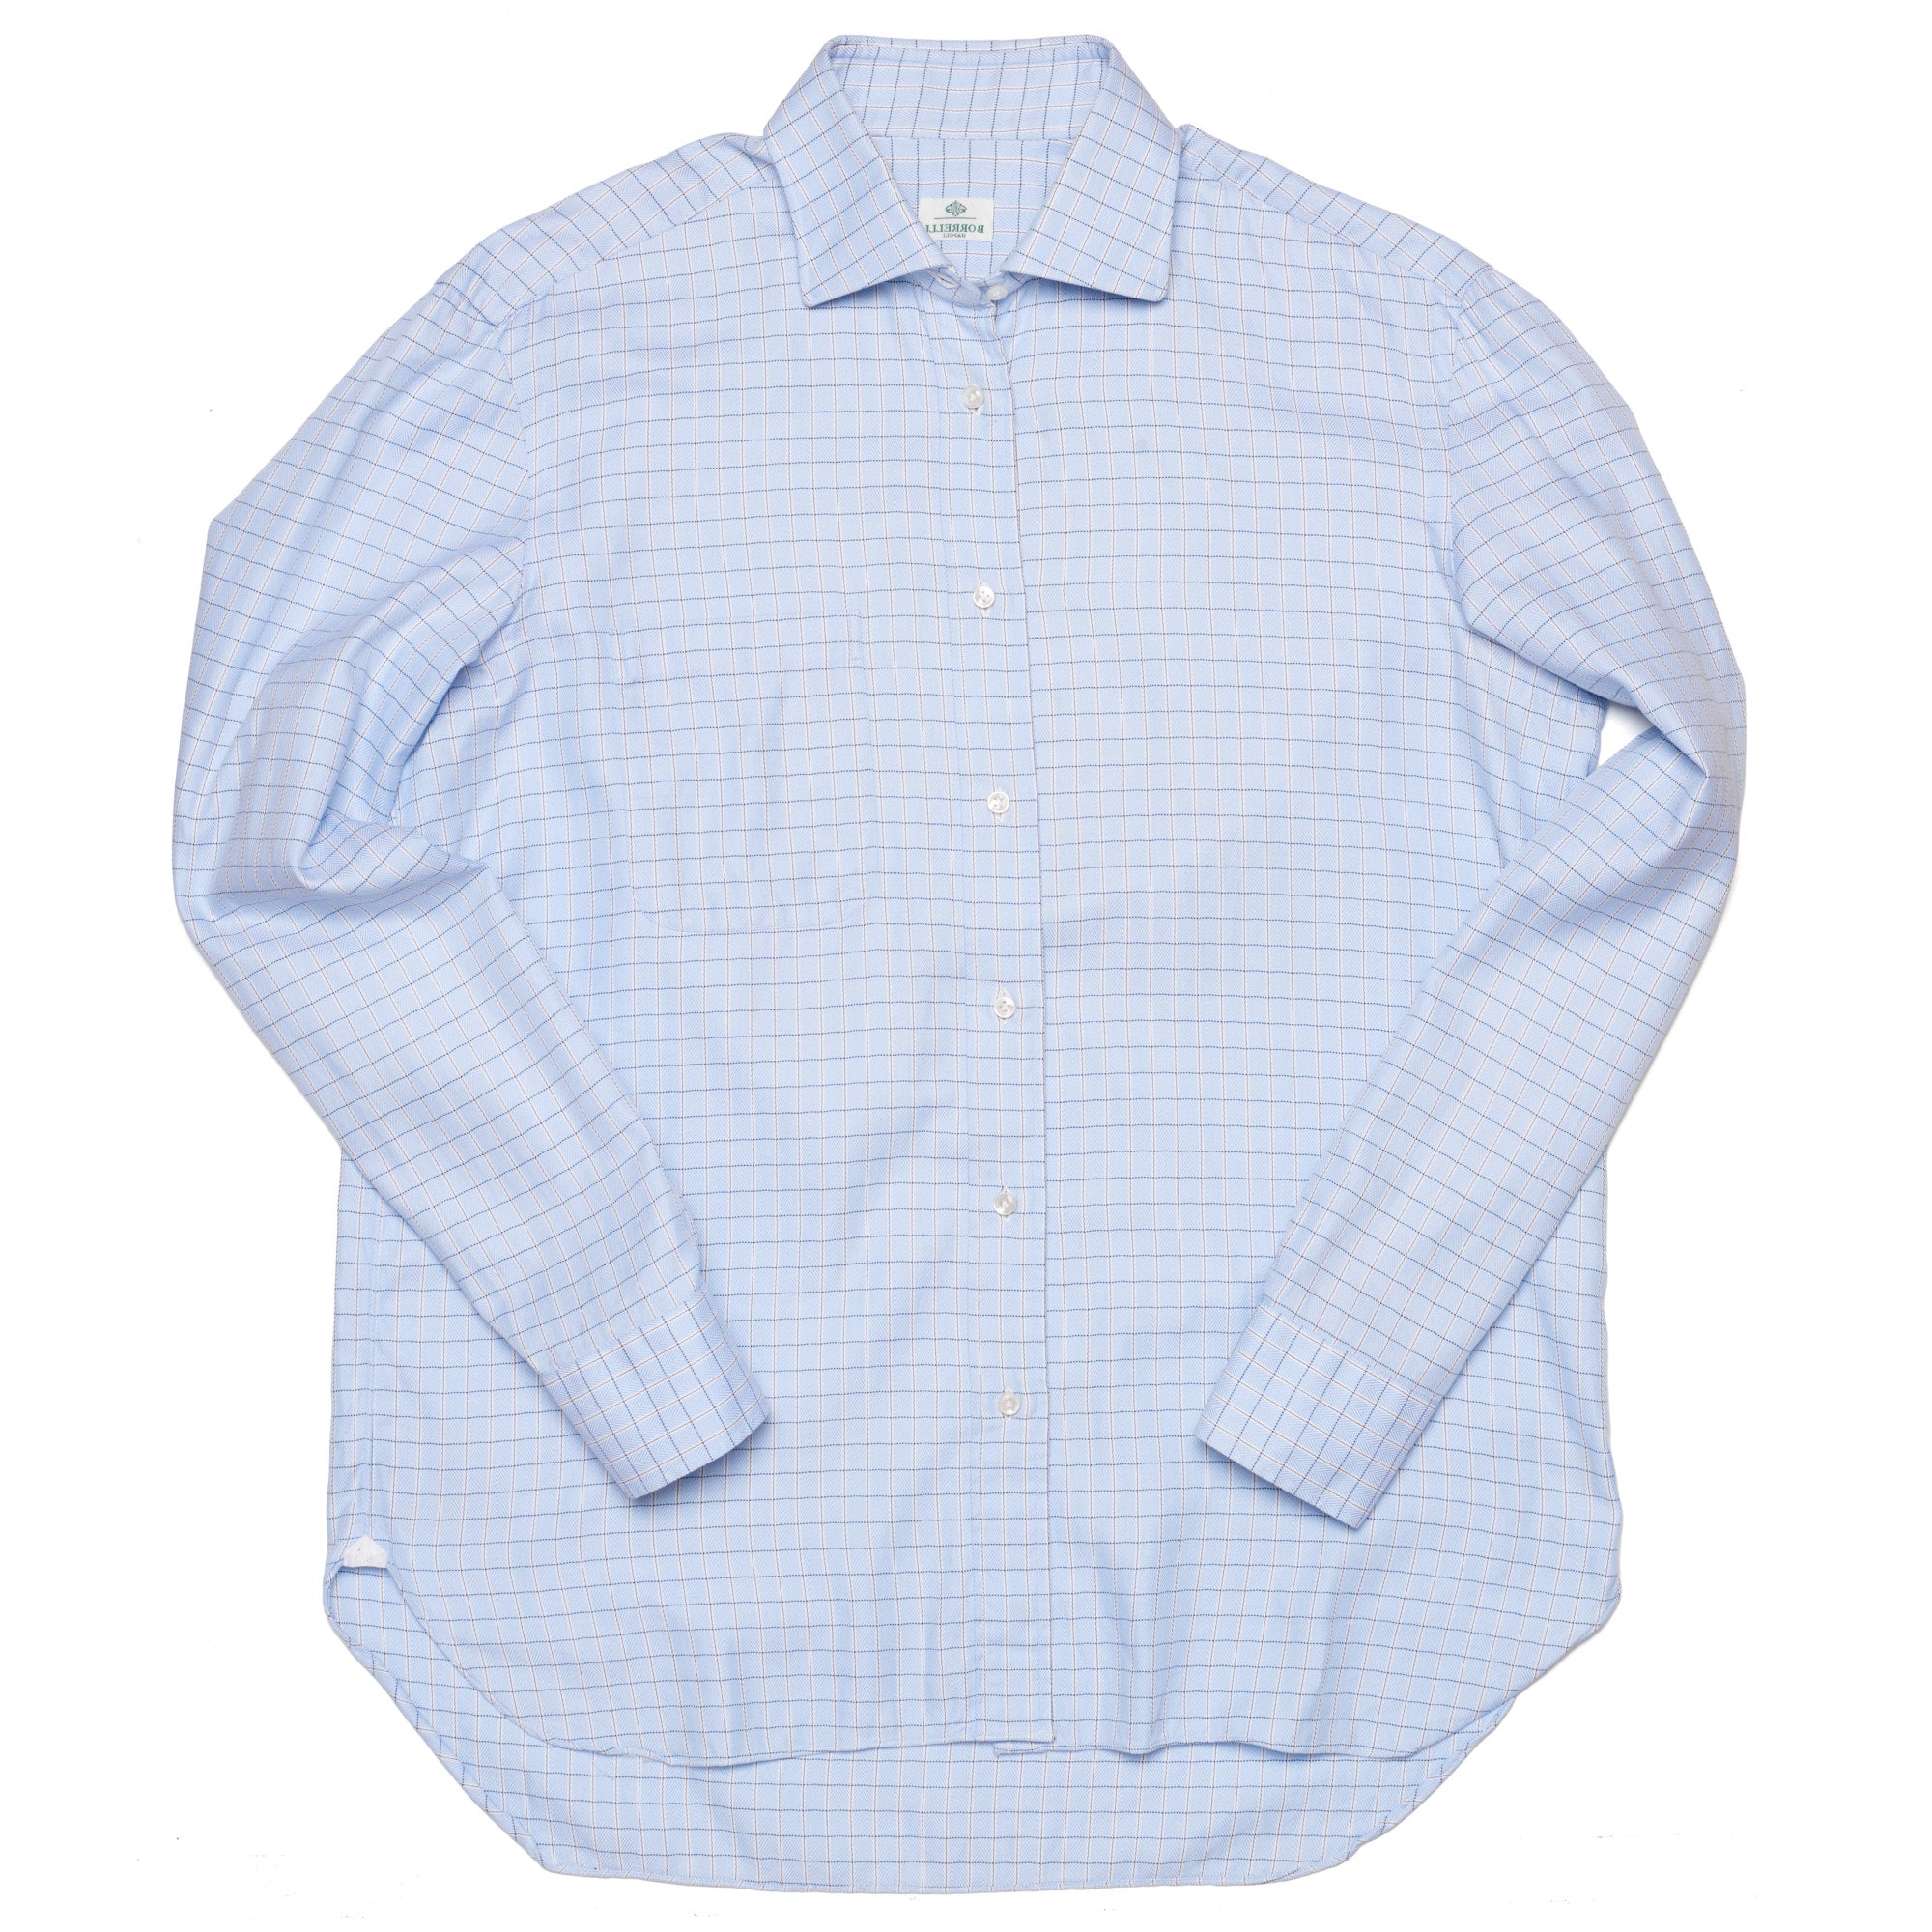 LUIGI BORRELLI Napoli Blue Herringbone Checked Cotton Dress Shirt EU 41 US 16 LUIGI BORRELLI